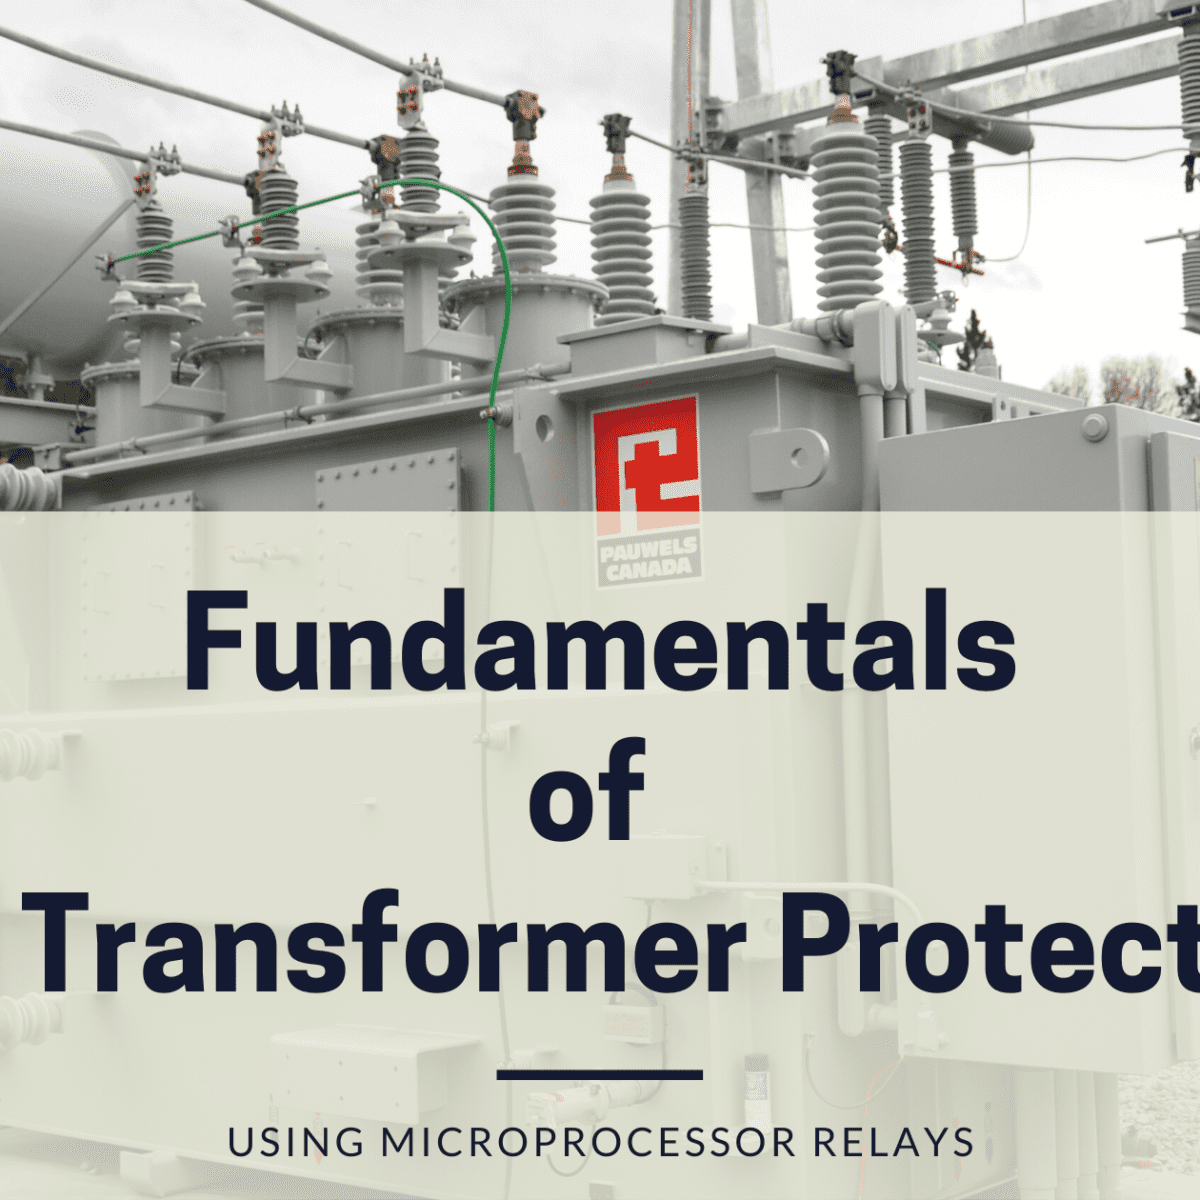 Medium-voltage transformers: fundamentals of medium-voltage